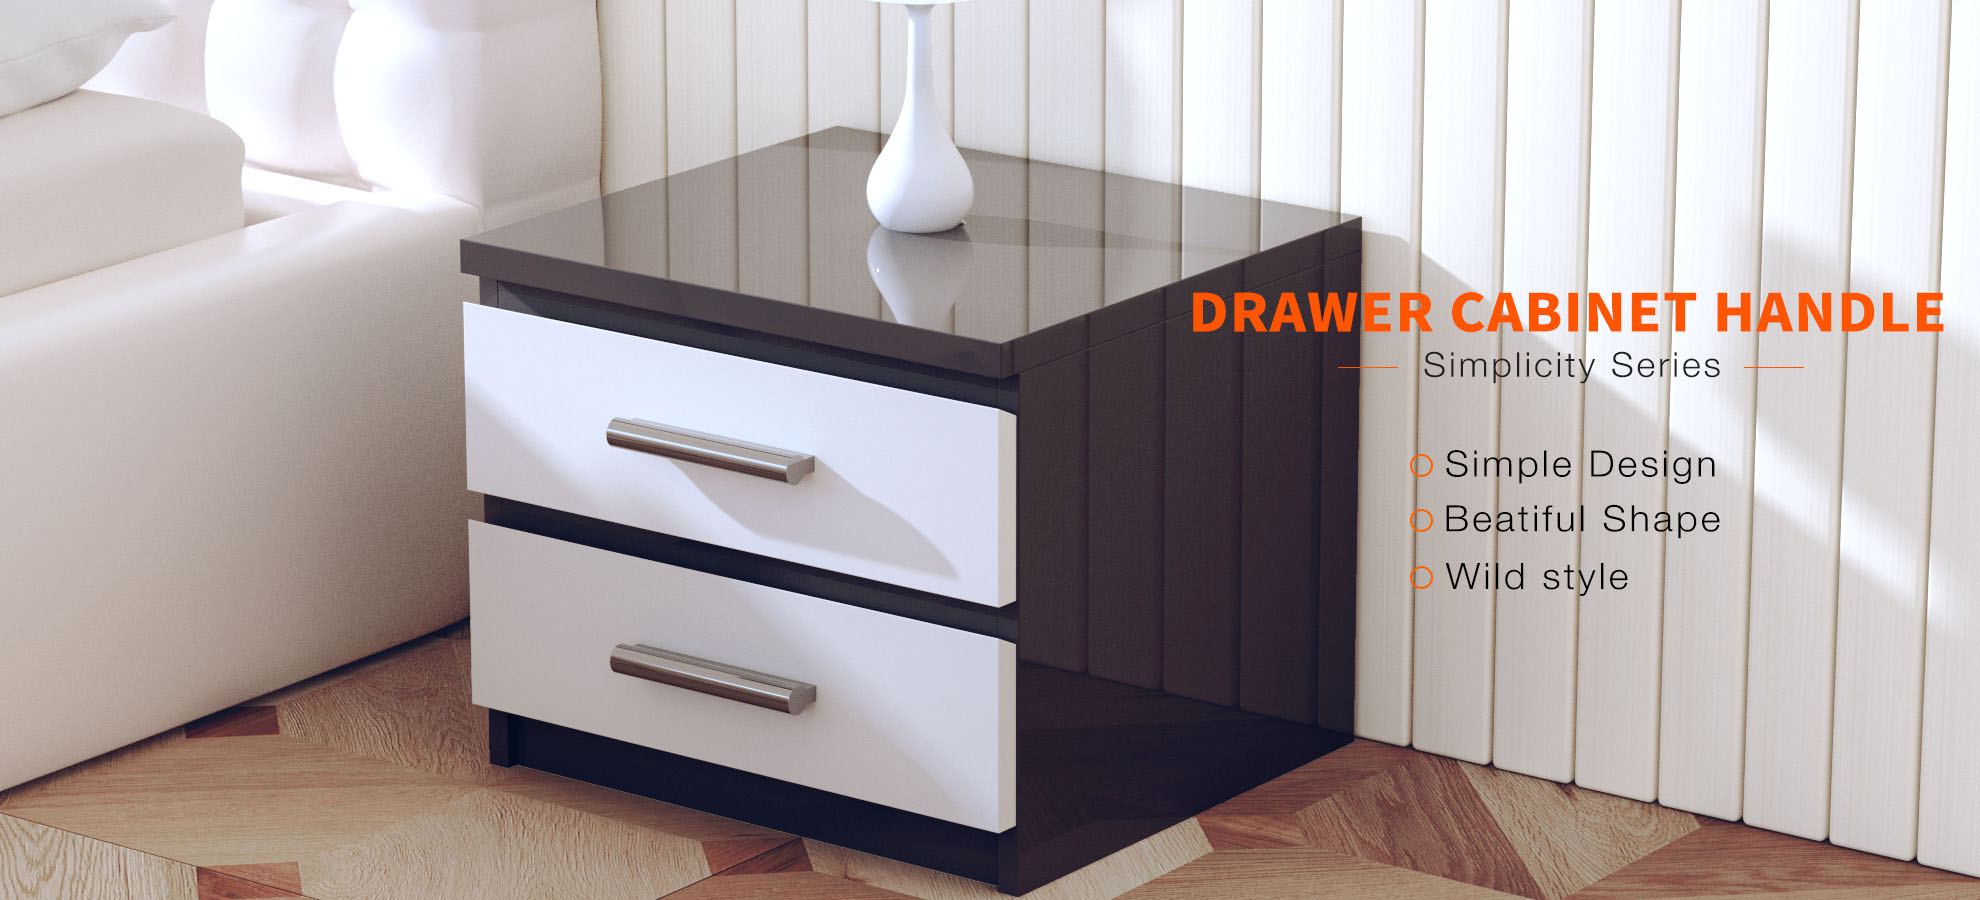 drawer cabinet handle